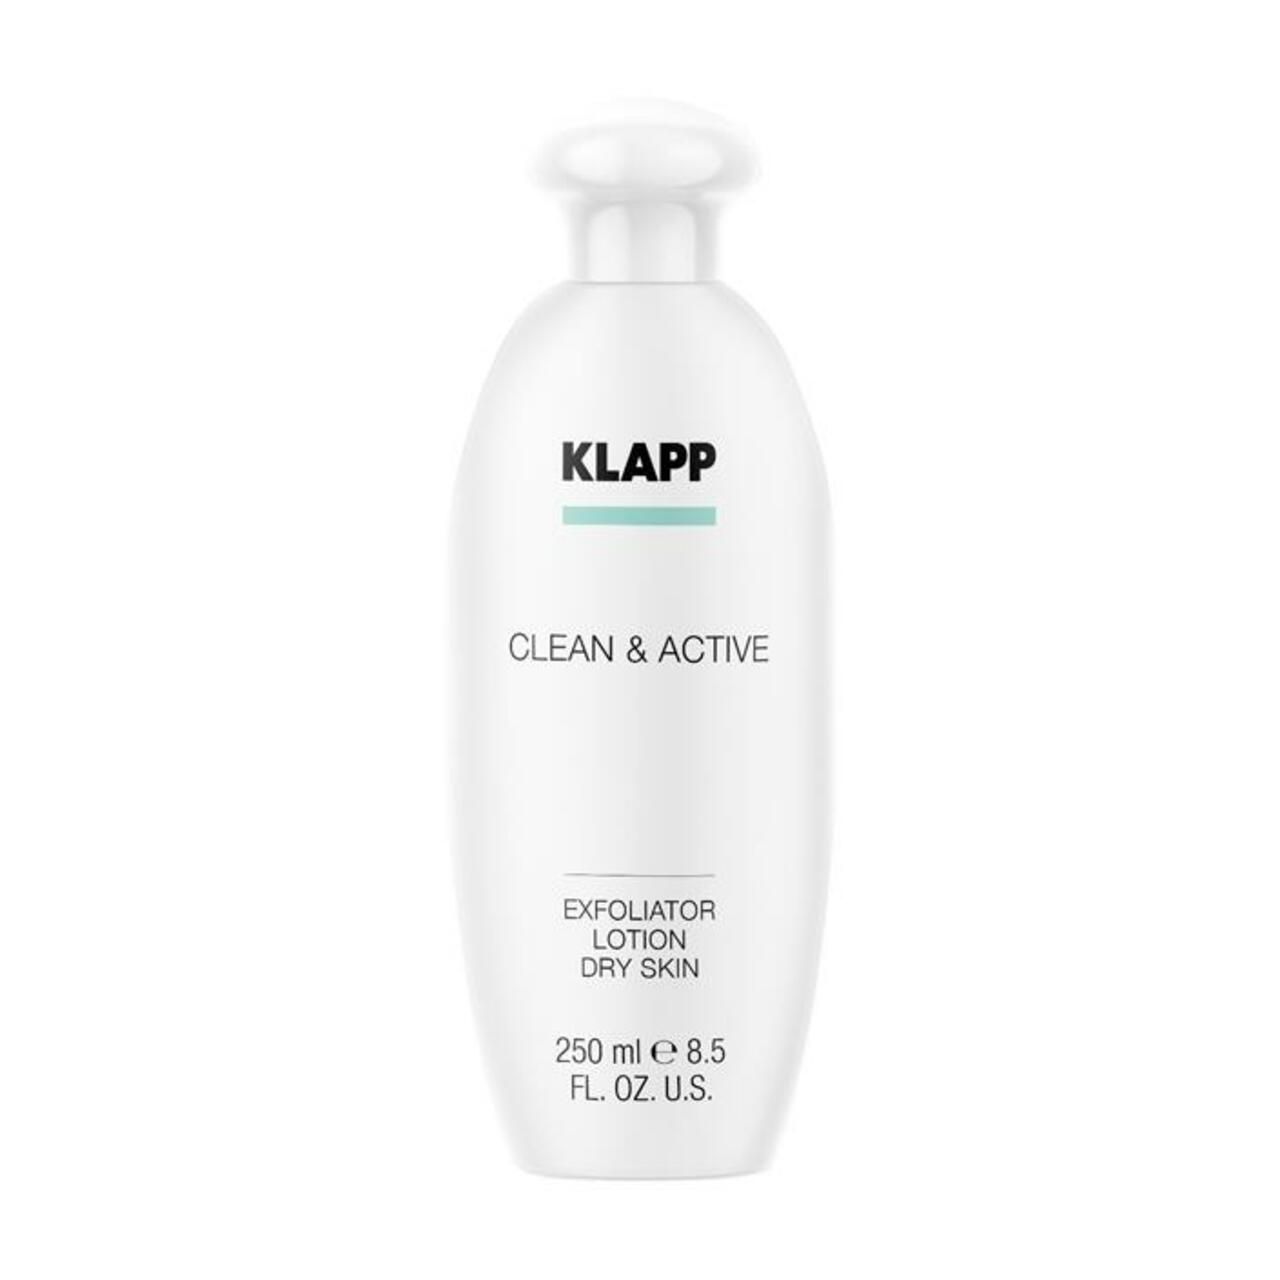 Klapp, Clean & Active Exfoliator Lotion Dry Skin